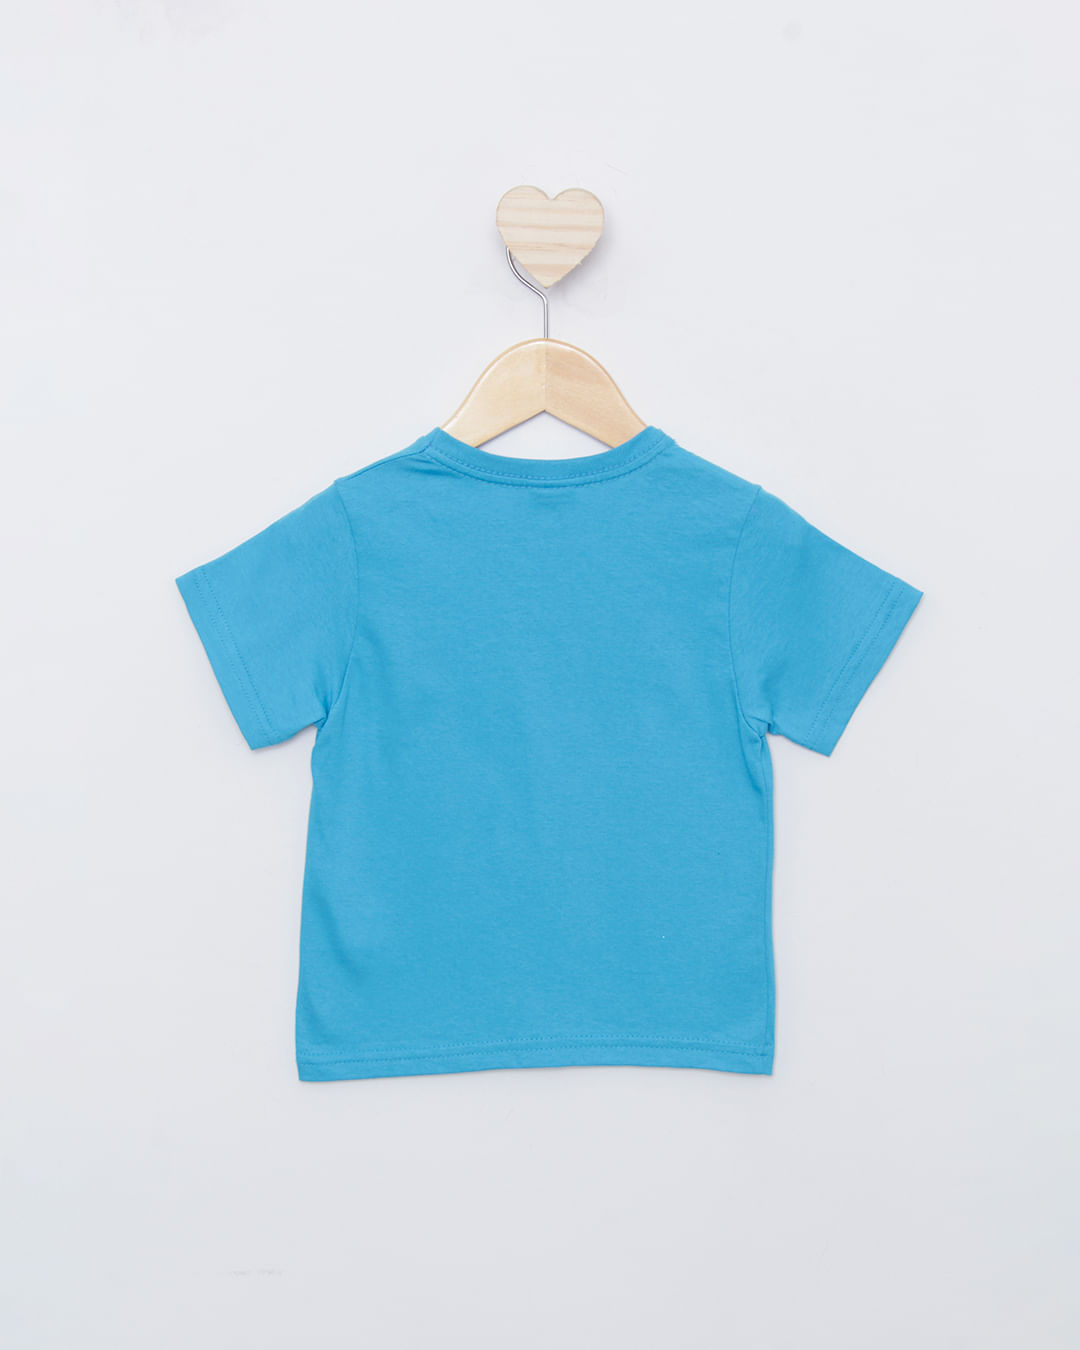 Camiseta-Mc-Zhor-3193-Masc13-Turqueza---Azul-Outros